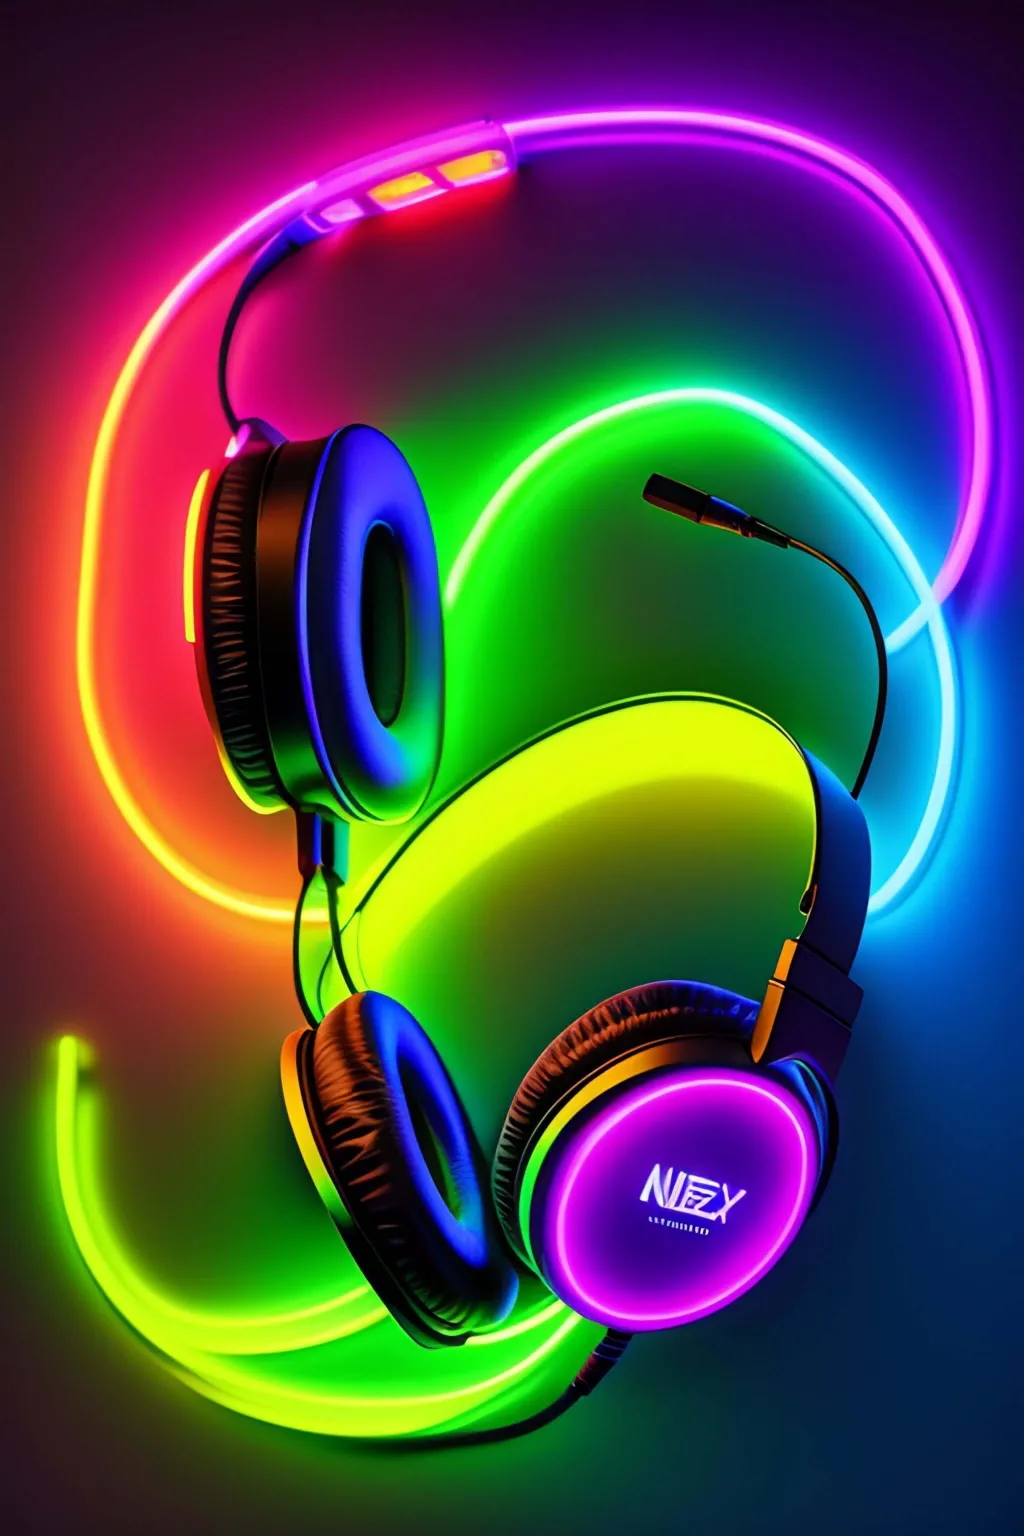 thumb for Neon Headphone Wallpaper